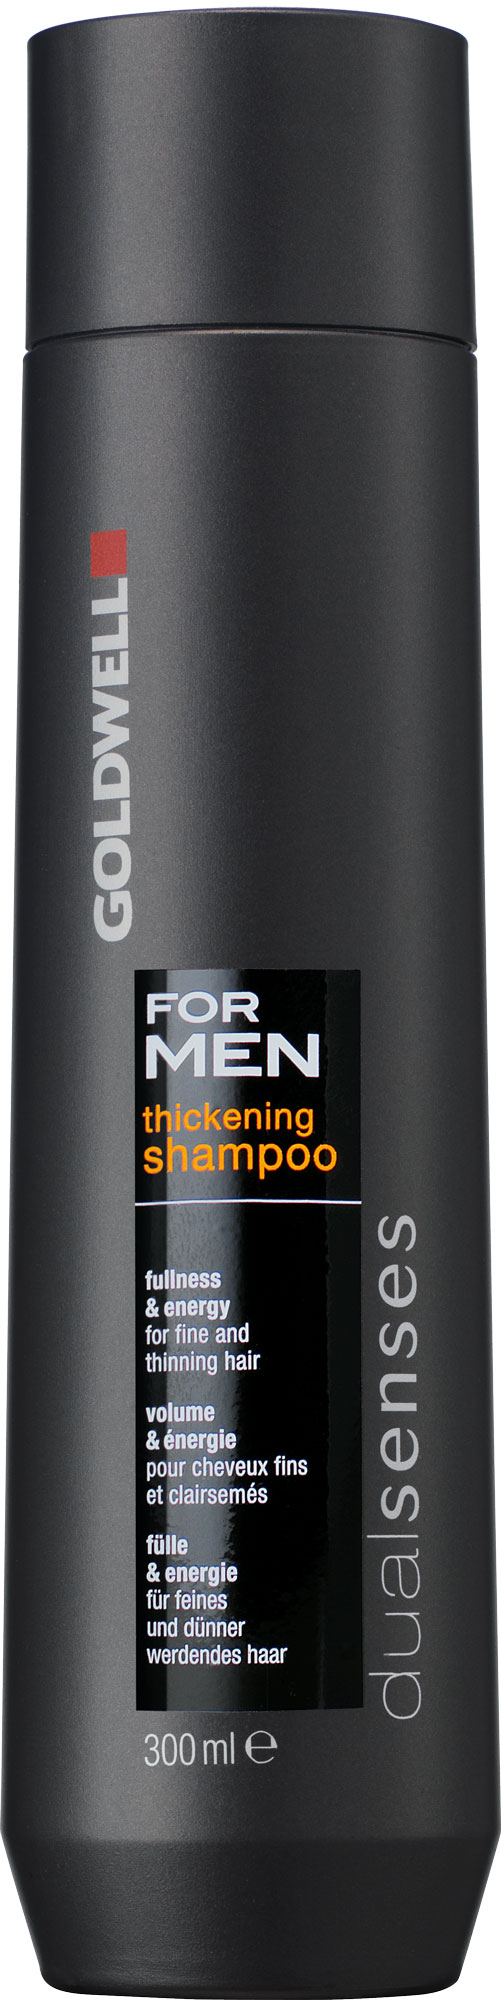 Goldwell Dualsenses For Men Thickening Shampoo